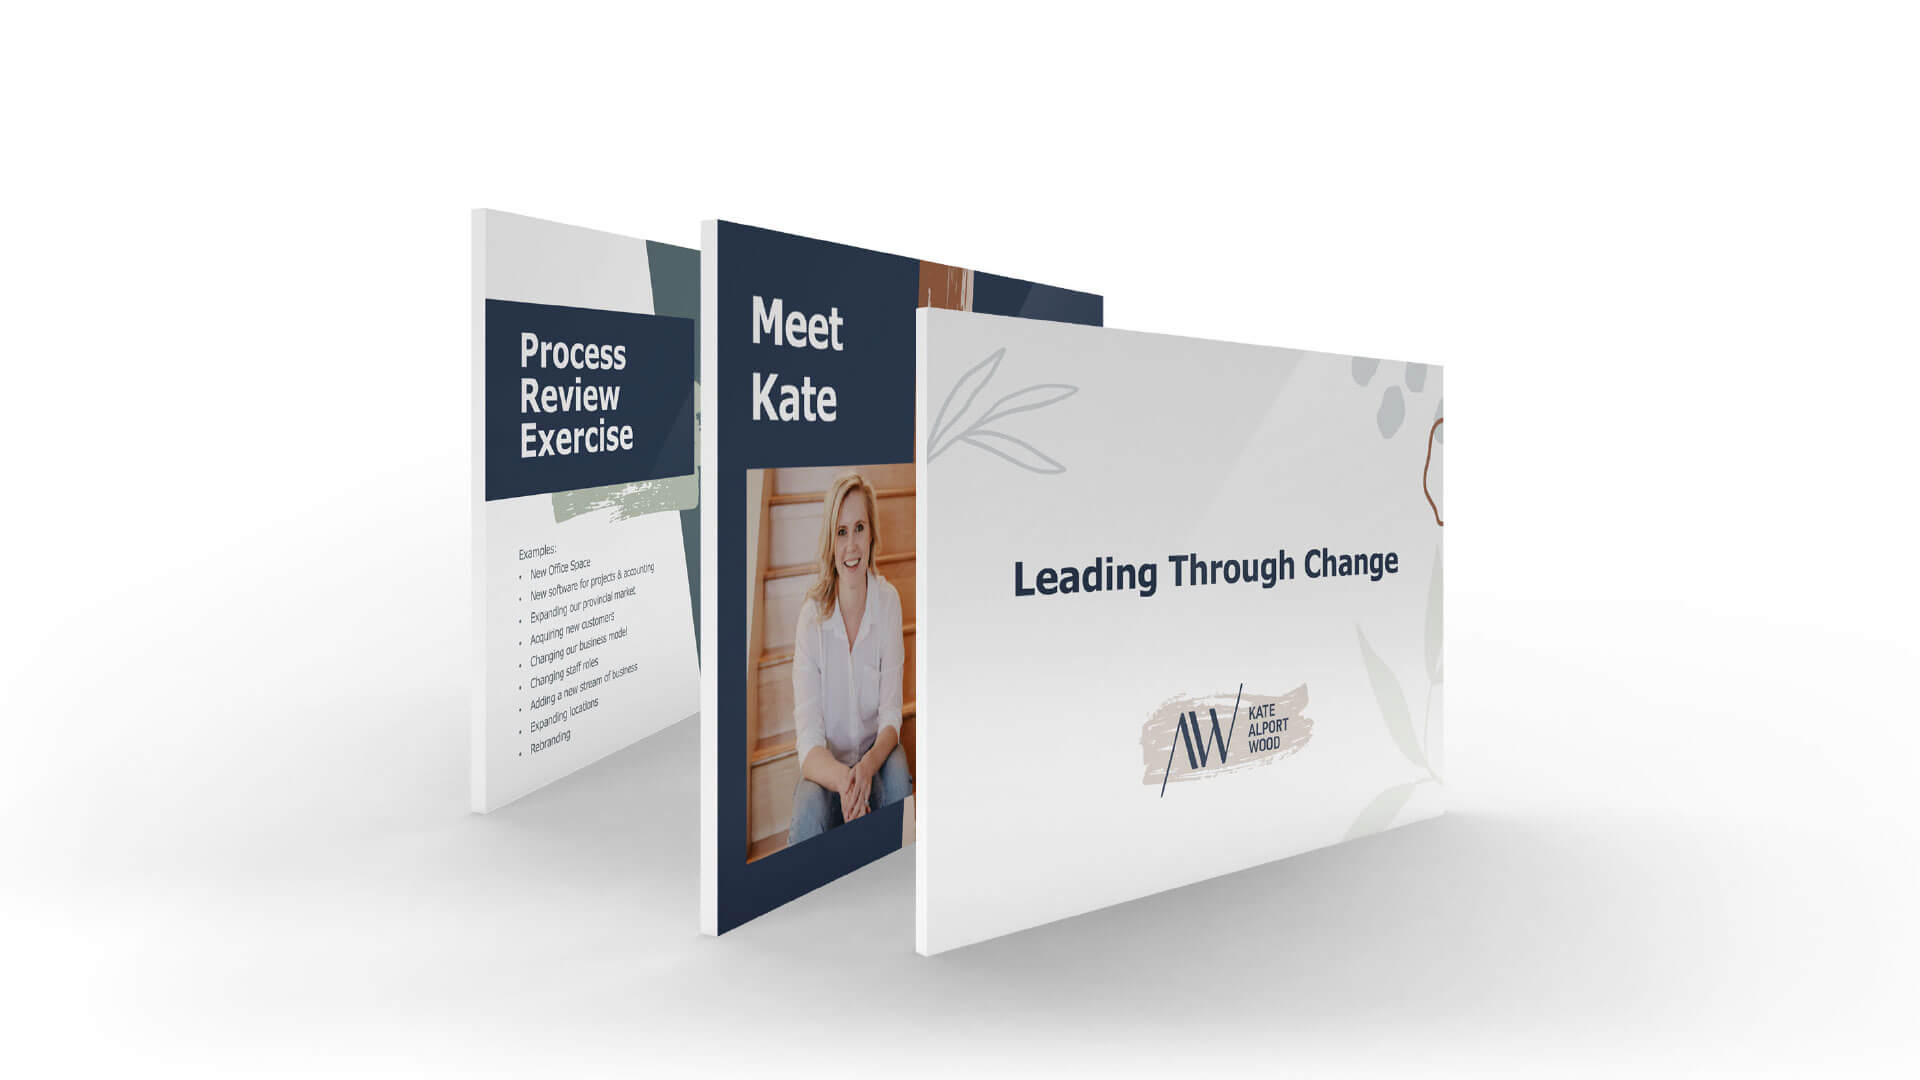 Kate Alport Wood Consulting, Digital, Kate Alport Wood Consulting Presentation Template, Portfolio Image, 